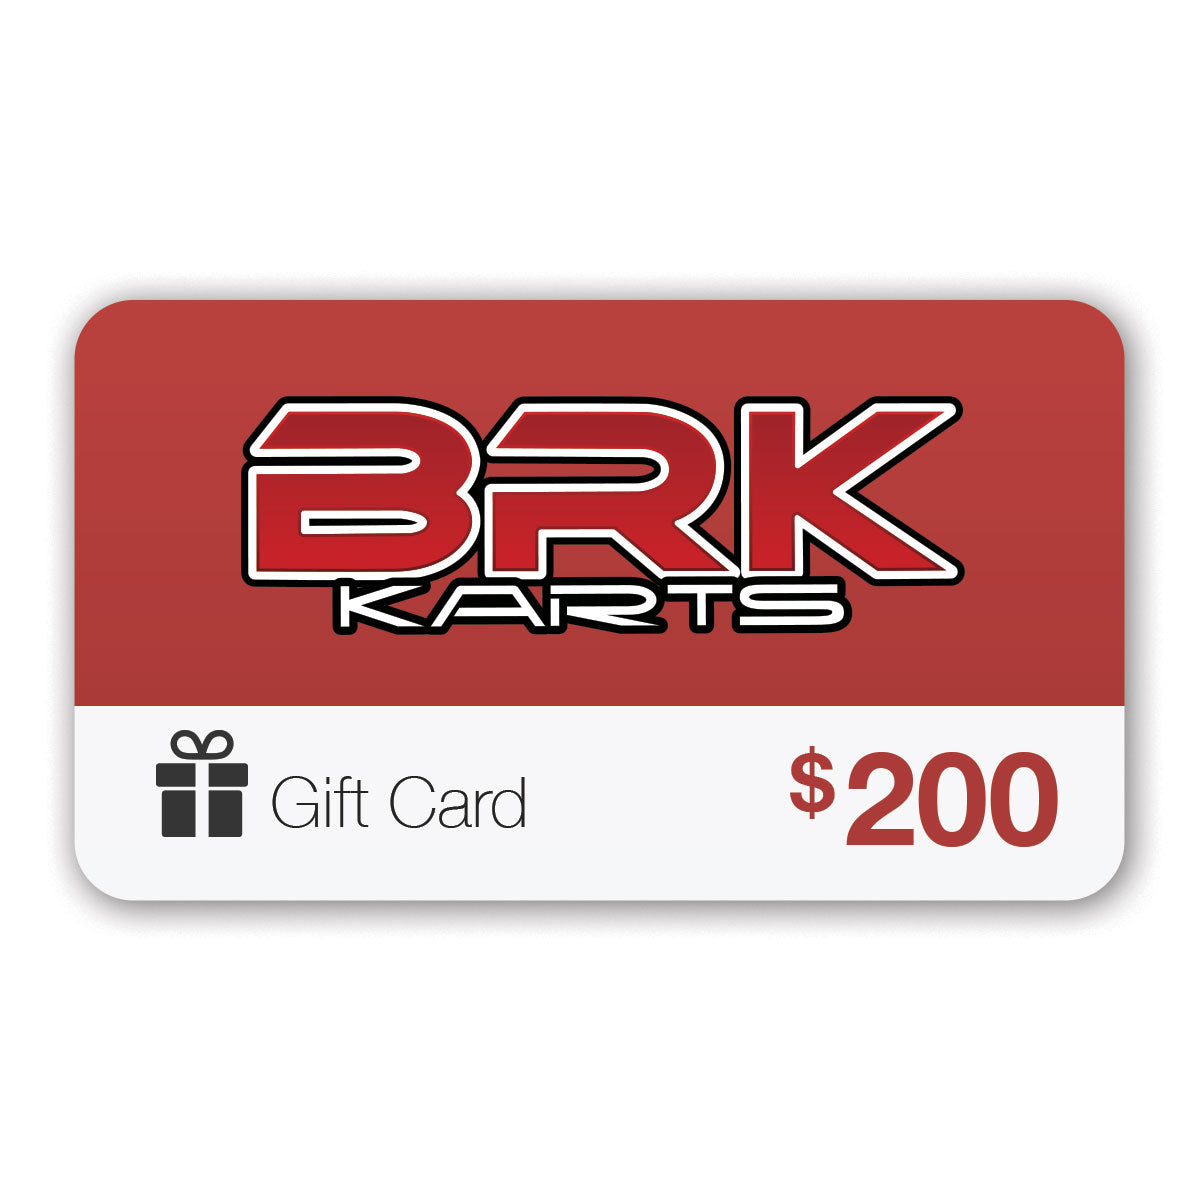 BRK Karts Gift Card - $200